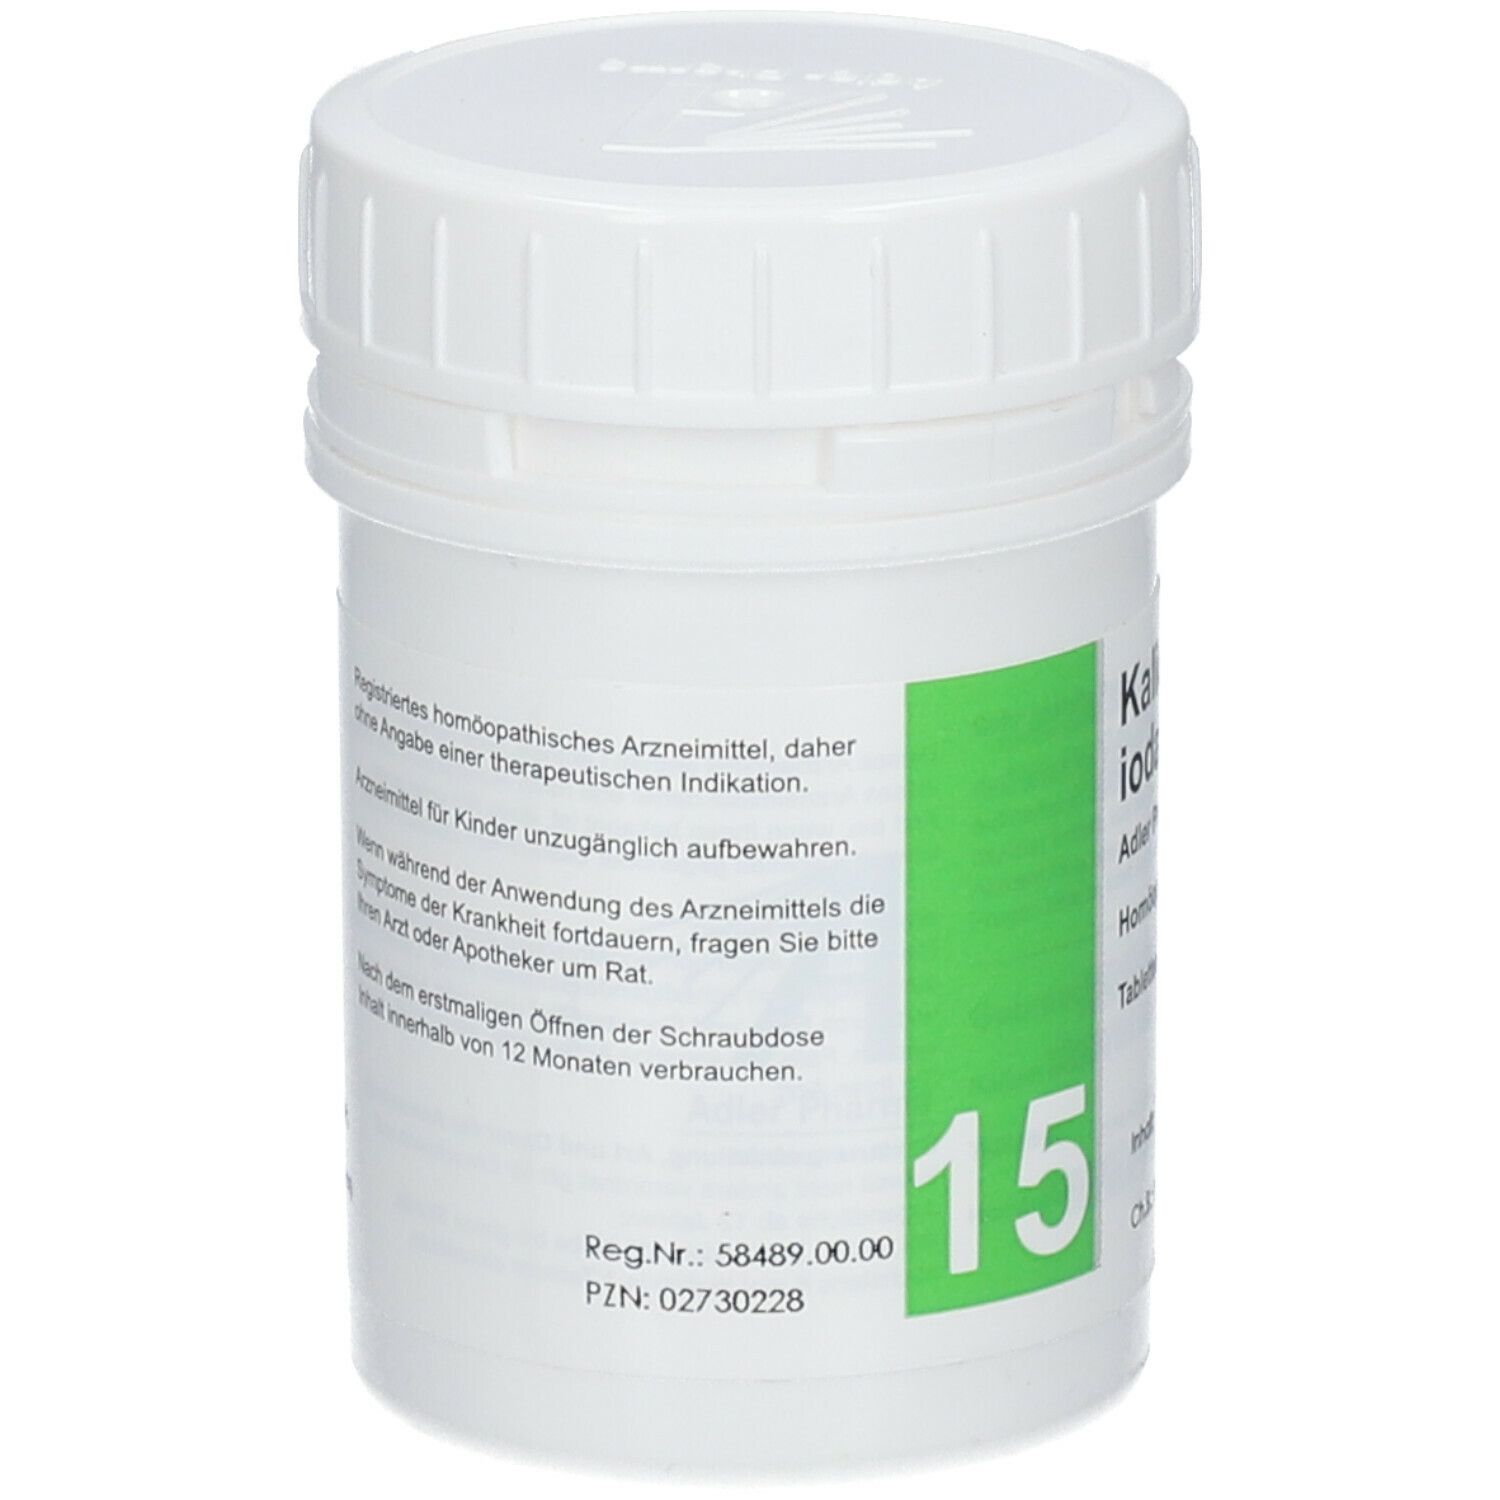 Adler Pharma Kalium iodatum D12 Biochemie nach Dr. Schüßler Nr. 15